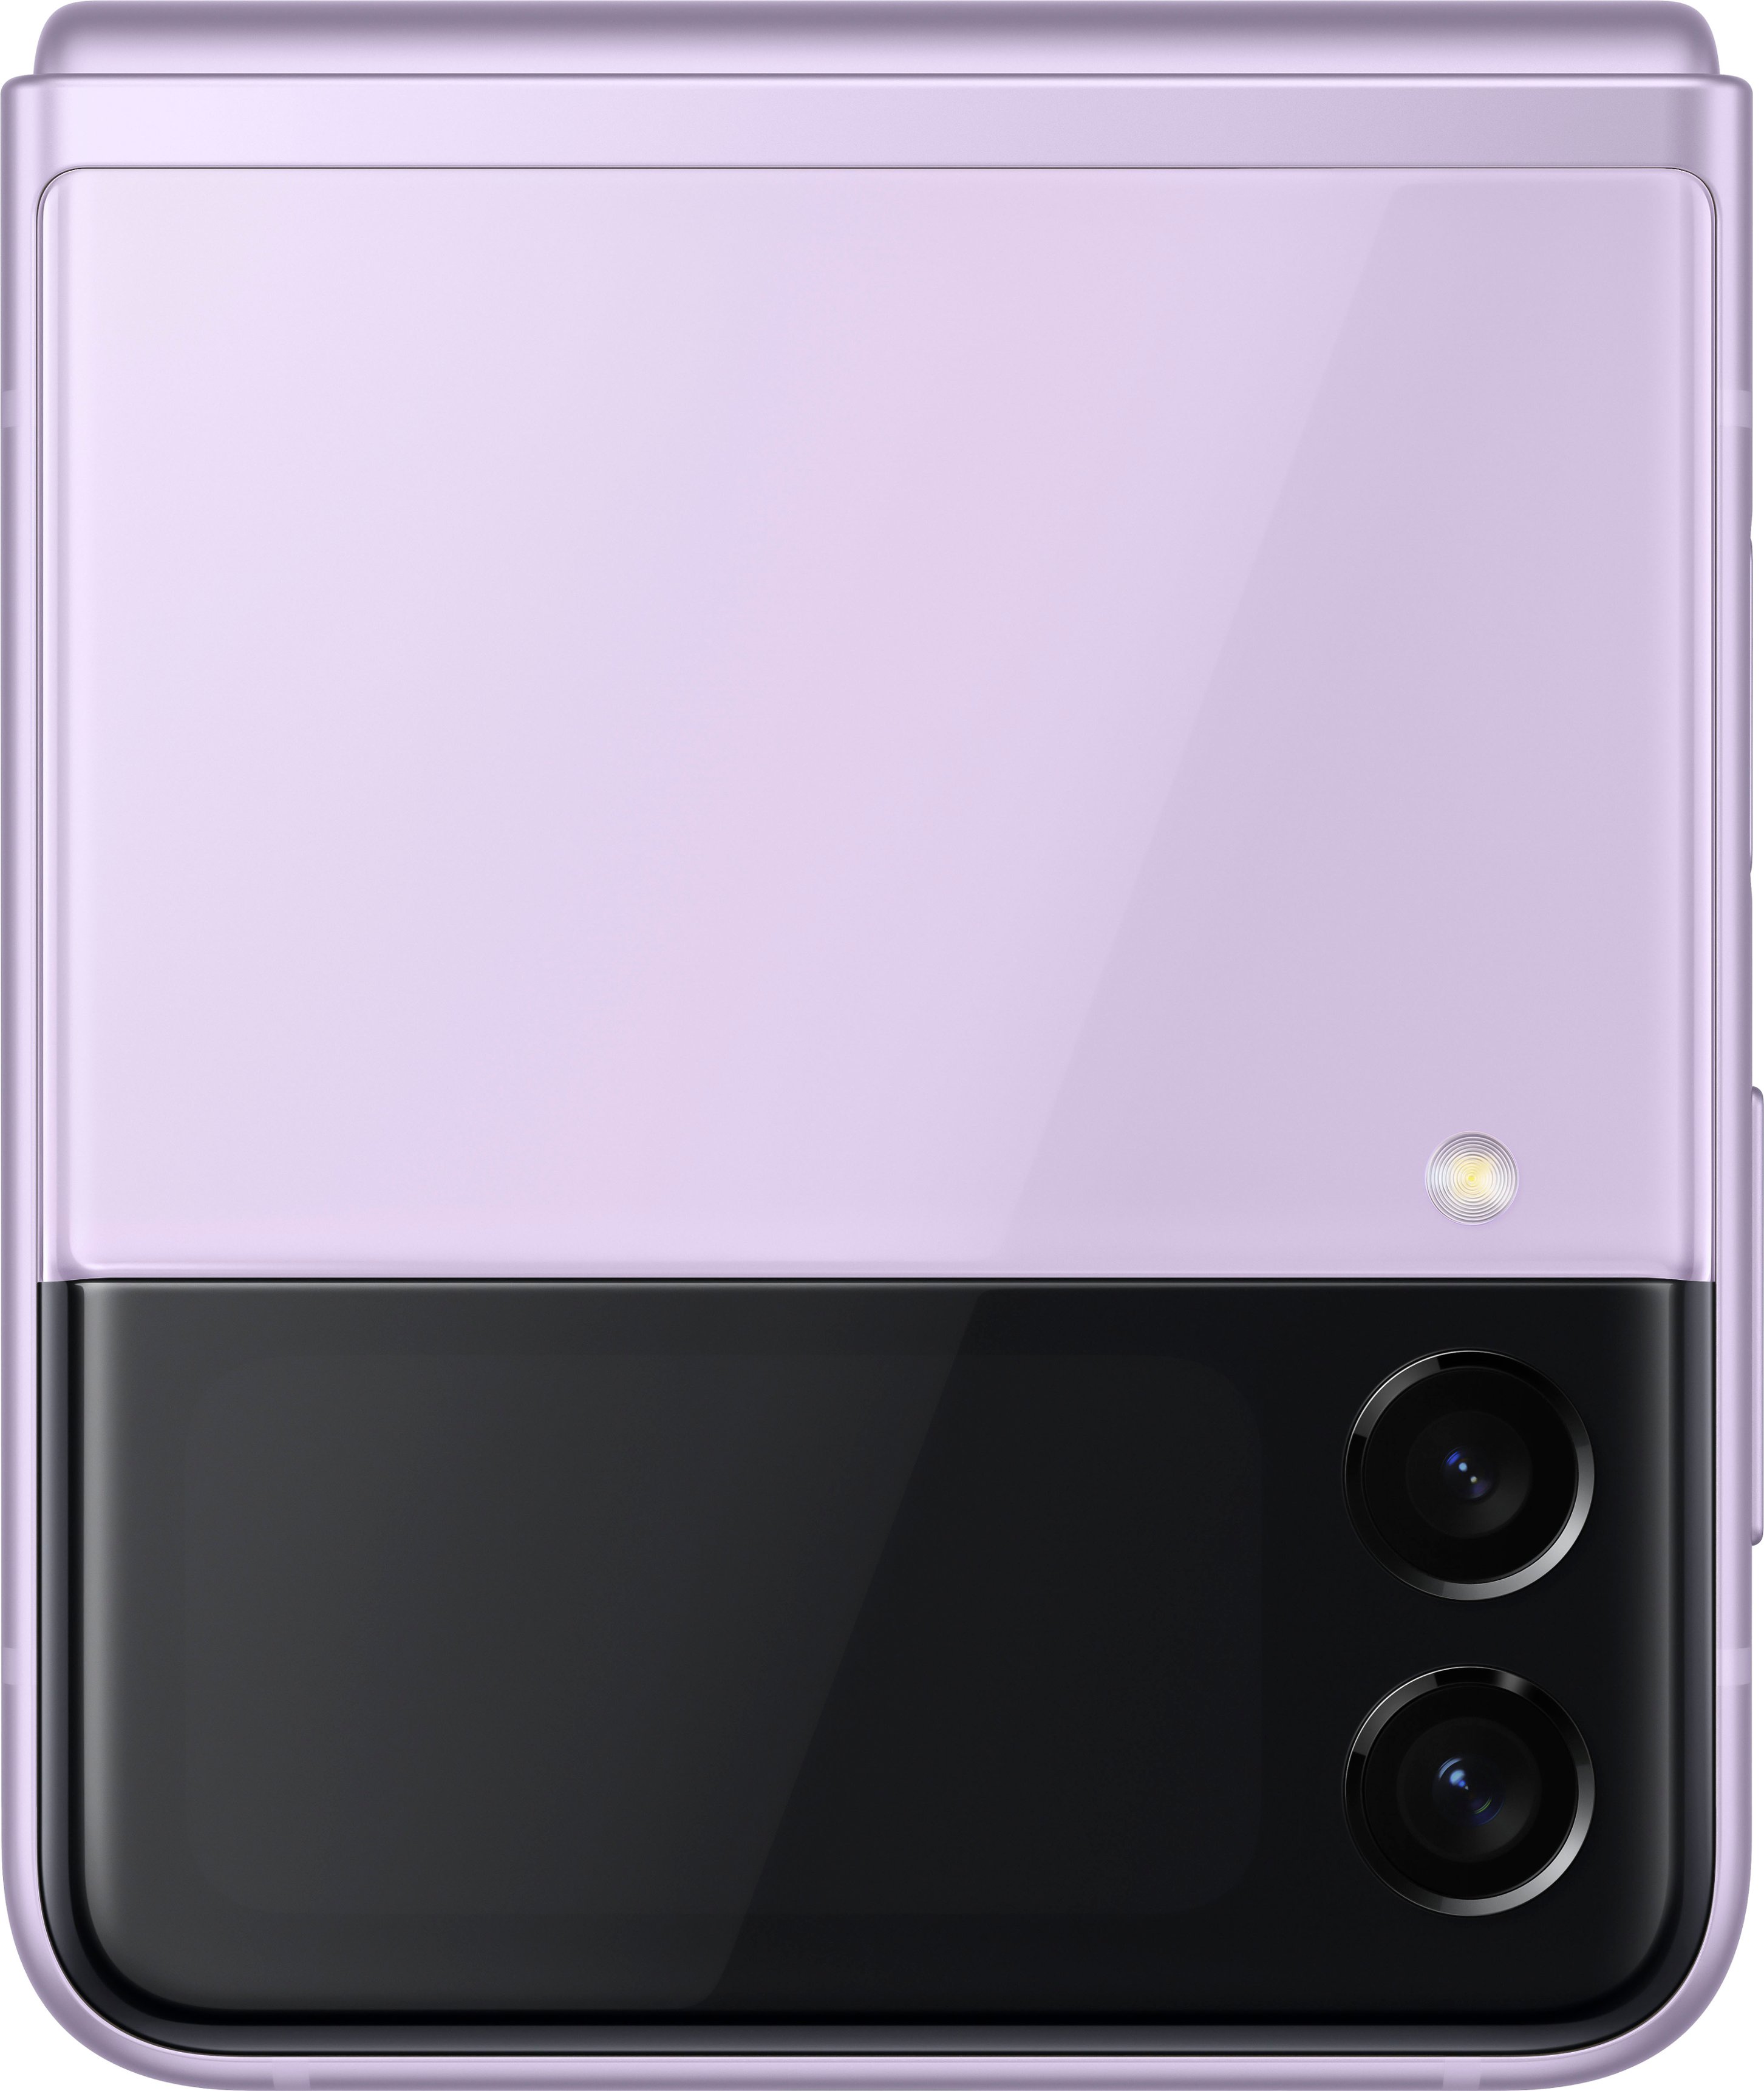 Samsung Galaxy Z Flip 3 5G SM-F711U1 256GB Gray (US Model